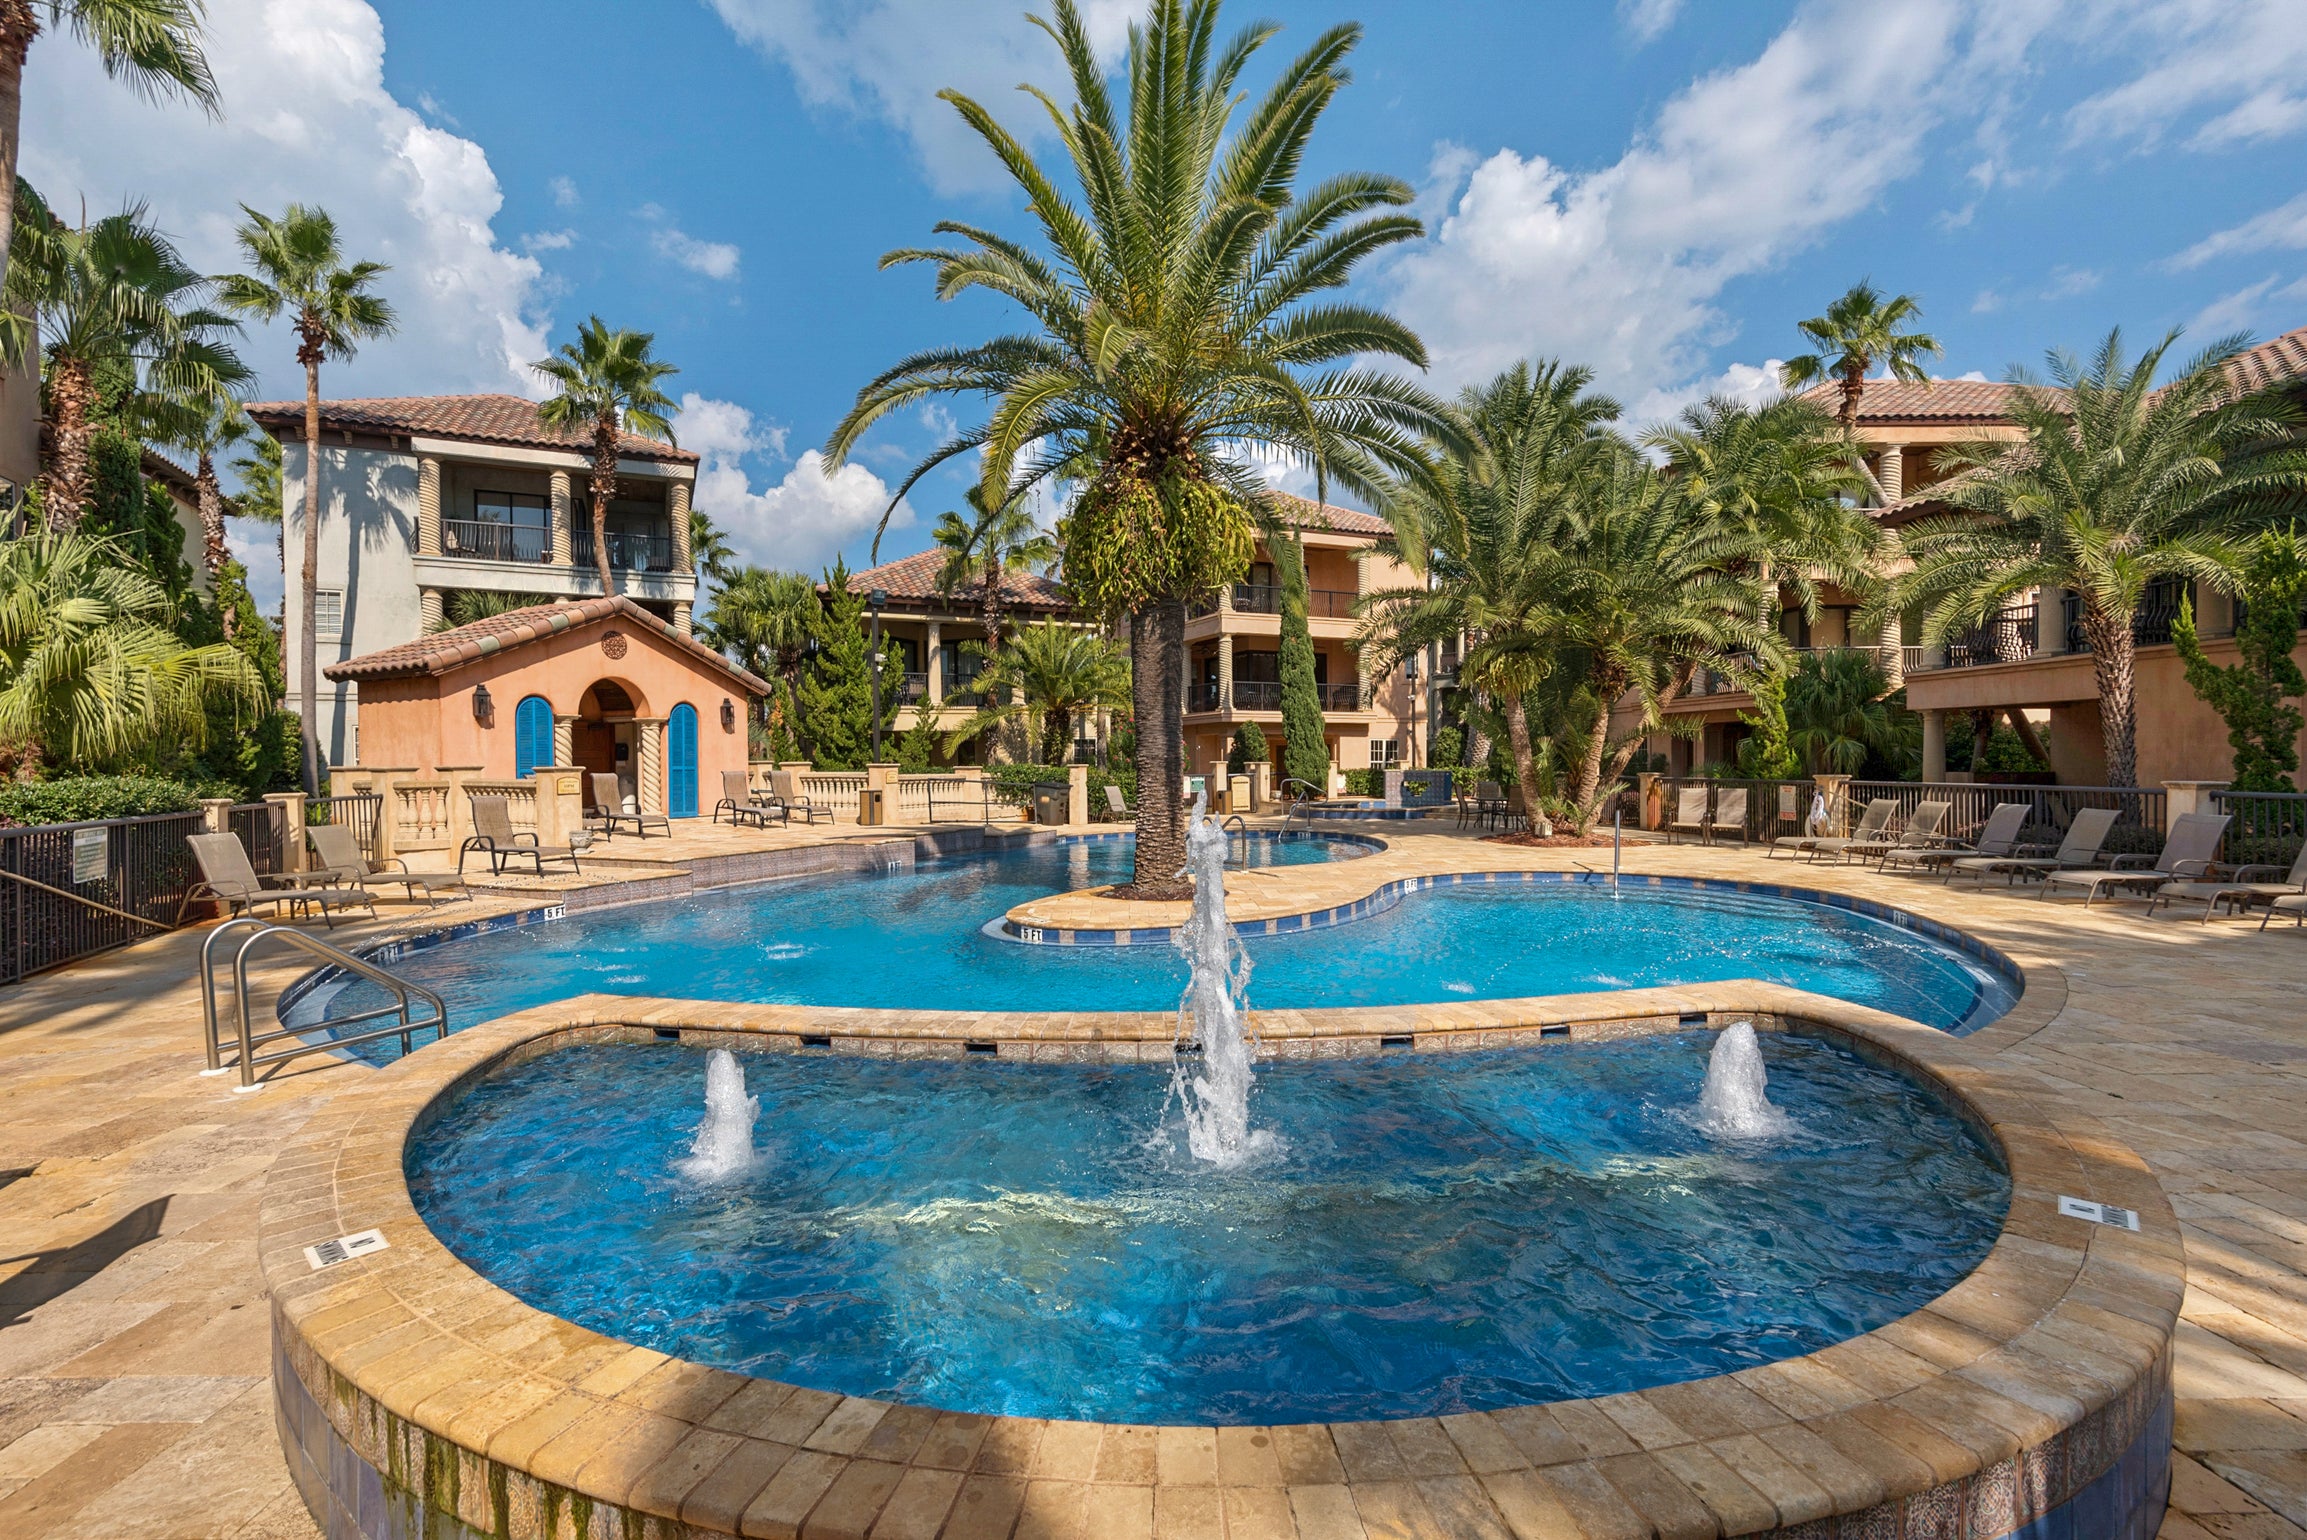 St Tropez community pool